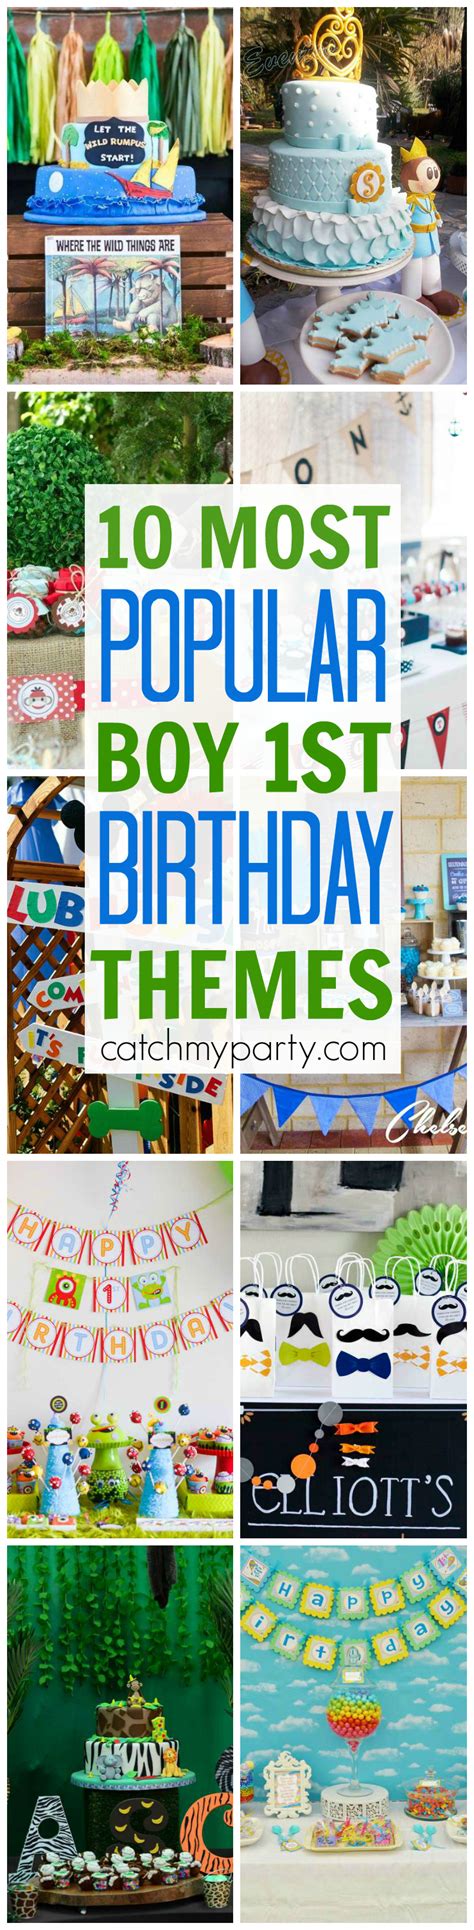 popular boy st birthday party themes catch  party